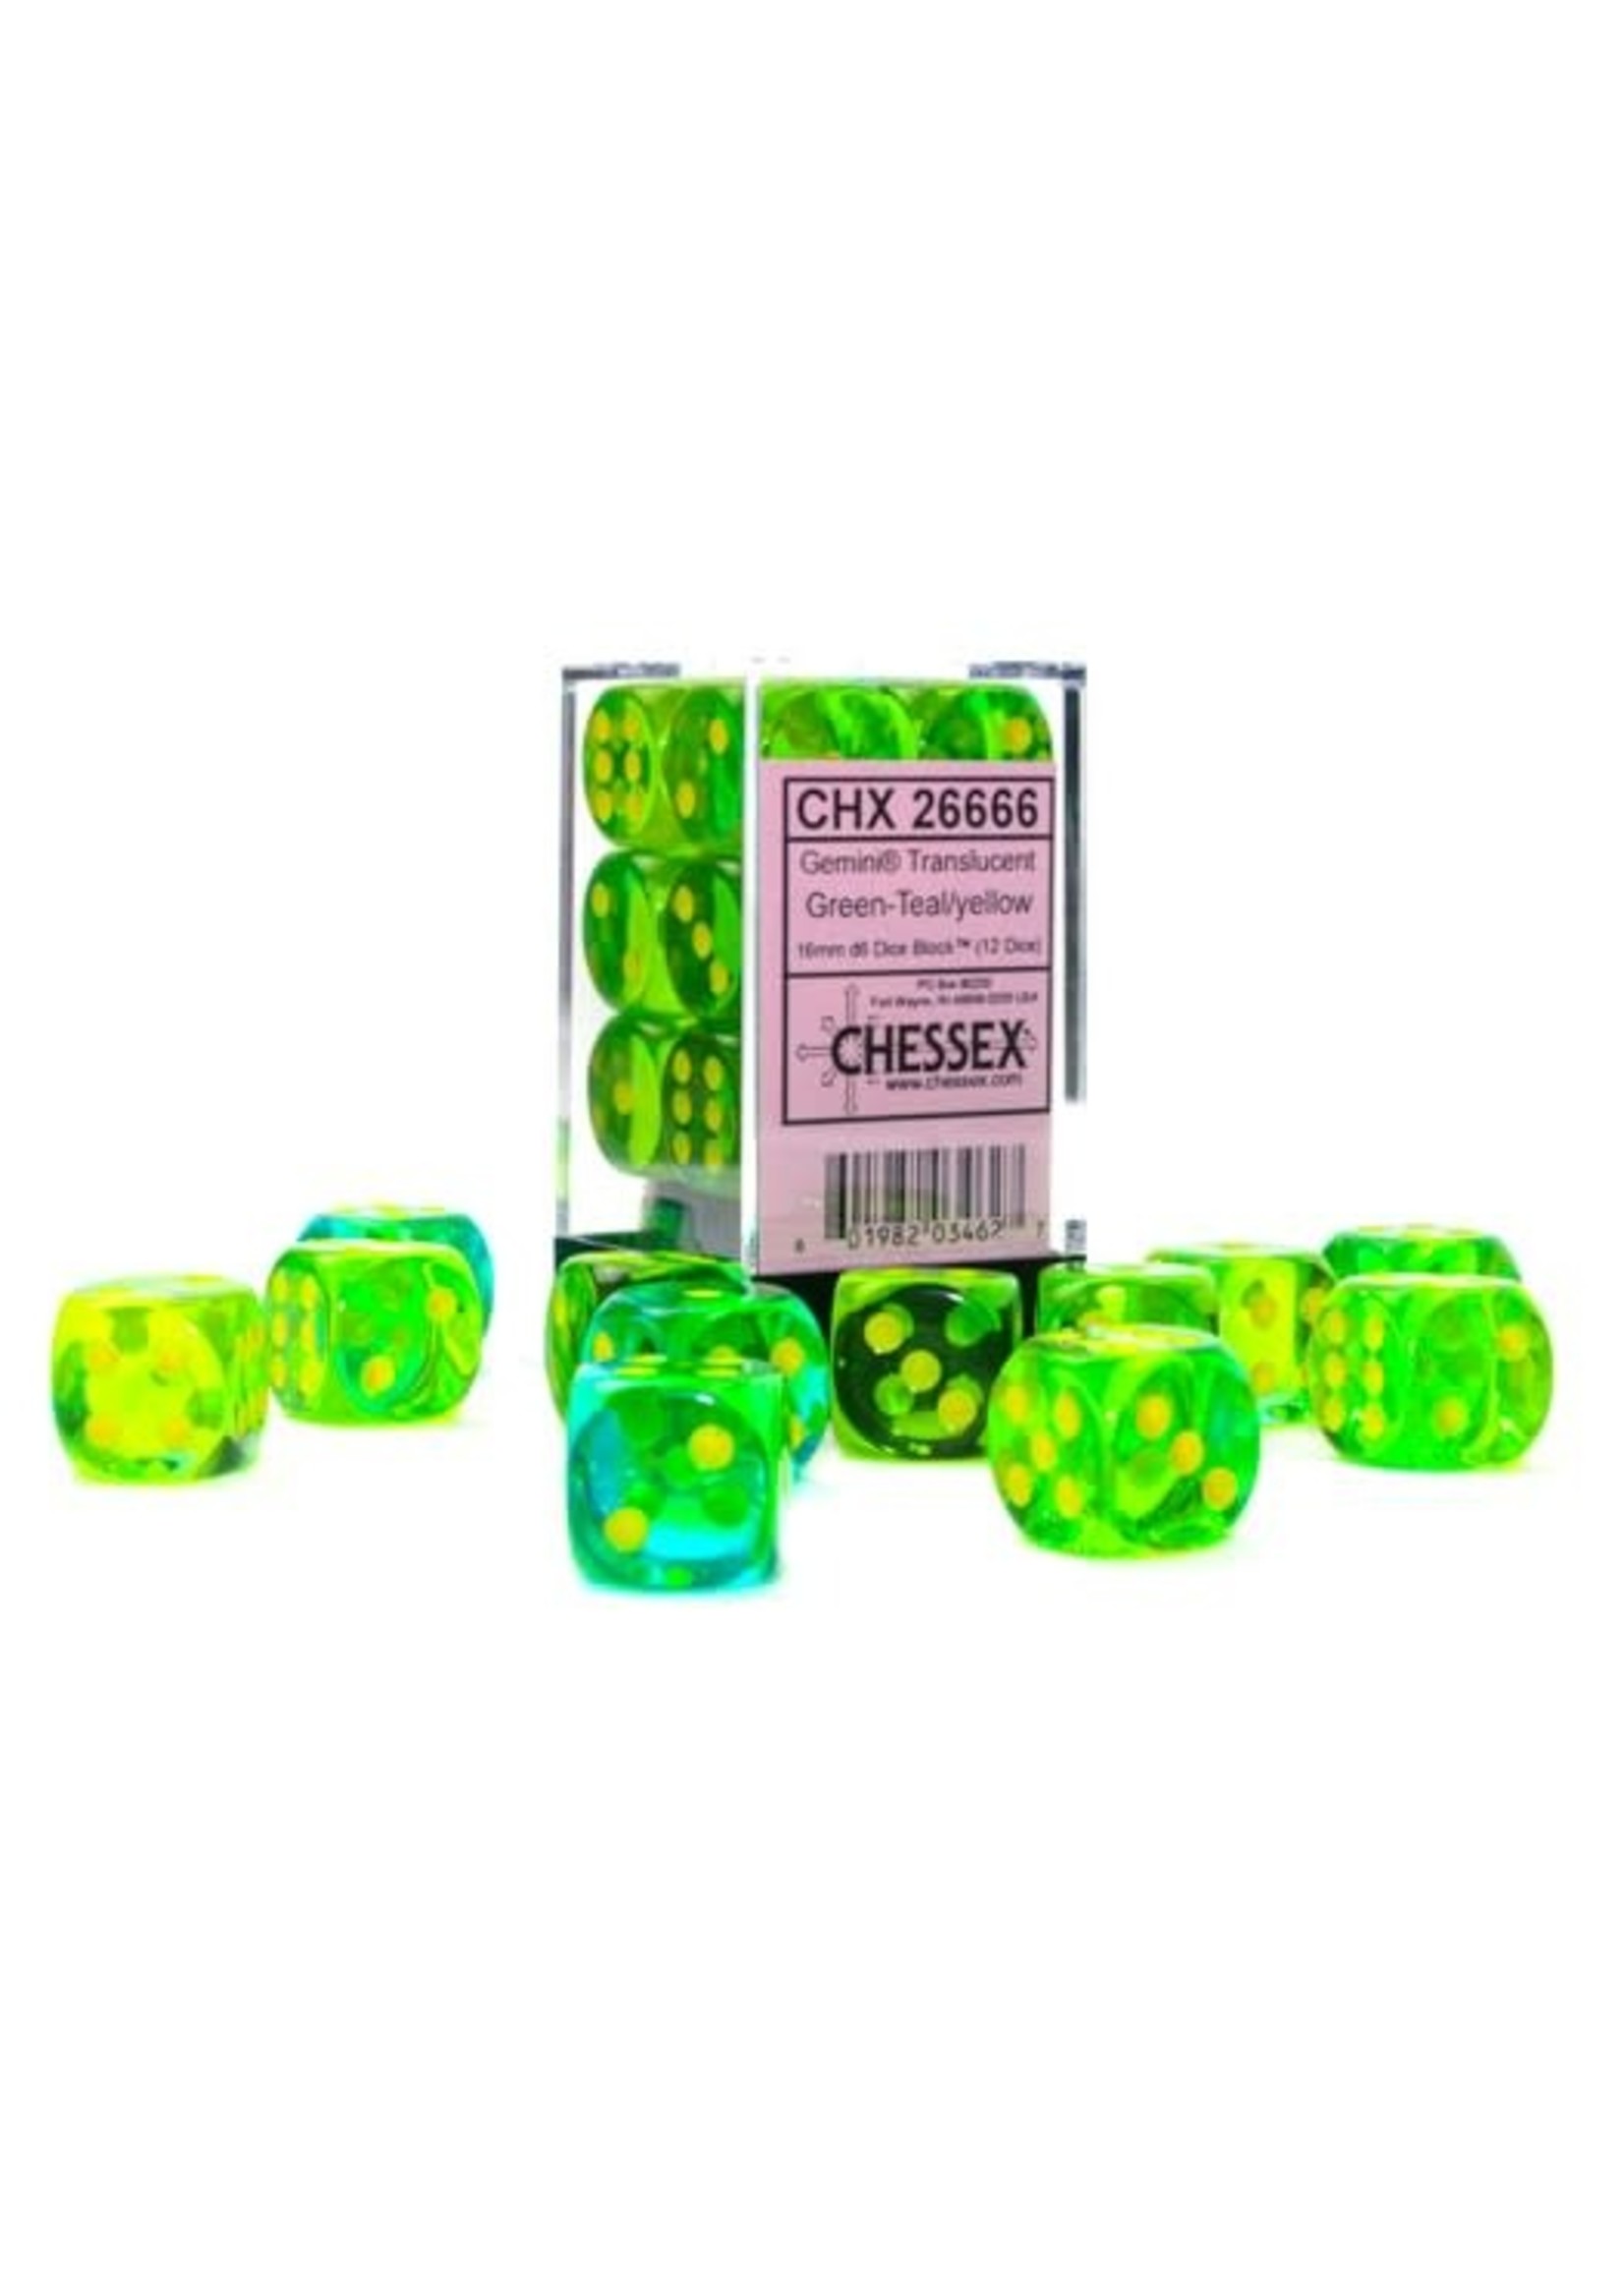 Chessex d6 Cube 16mm Gemini Translucent Green & Teal w/ yellow (12)